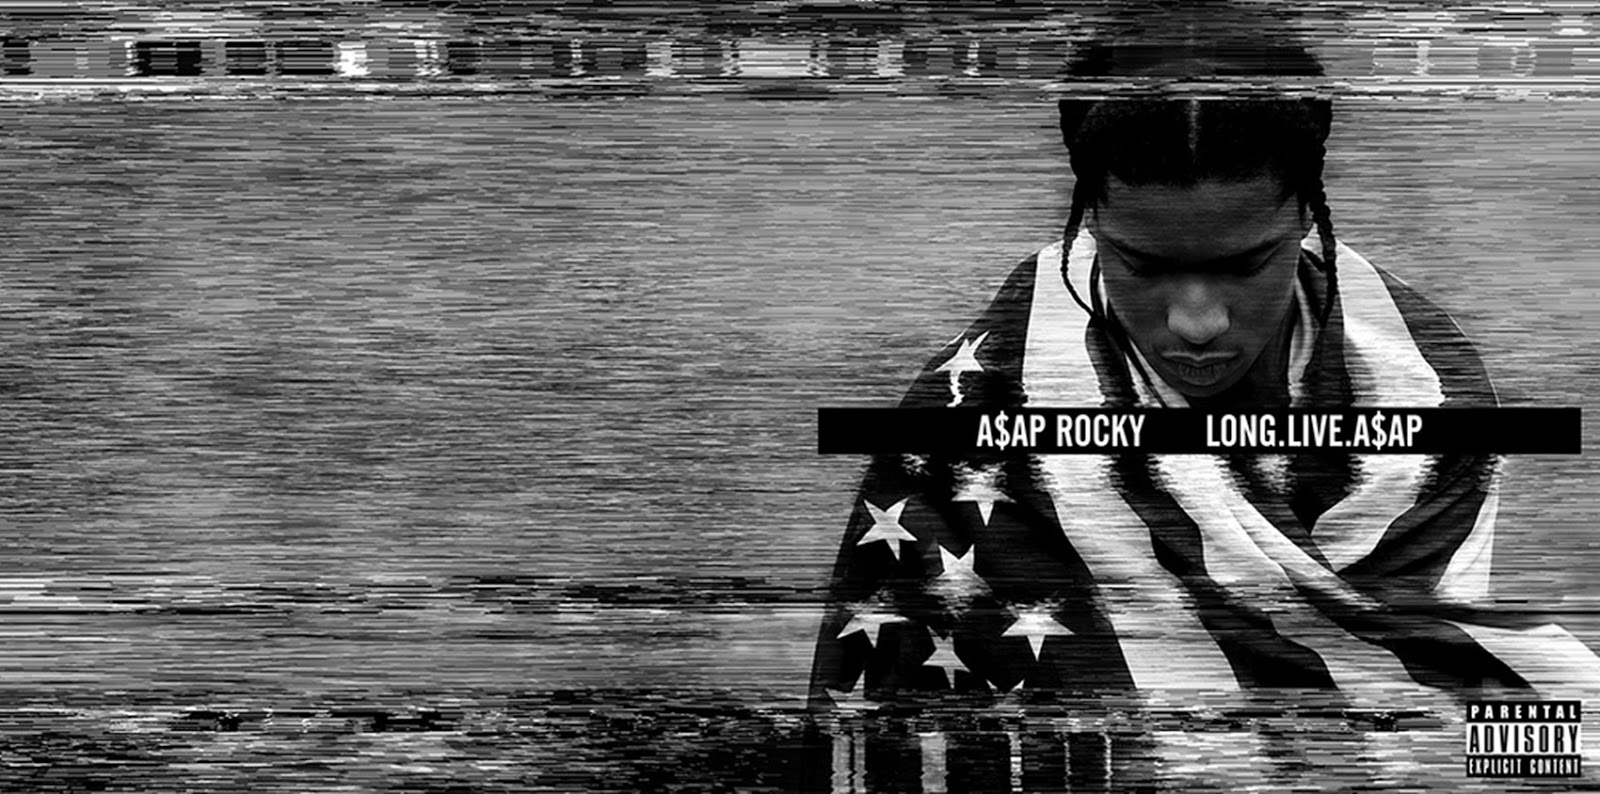 A life long year. ASAP Rocky long Live ASAP. Long Live ASAP обложка. ASAP Rocky album. A$AP Rocky "long.Live.a$AP" обложка.